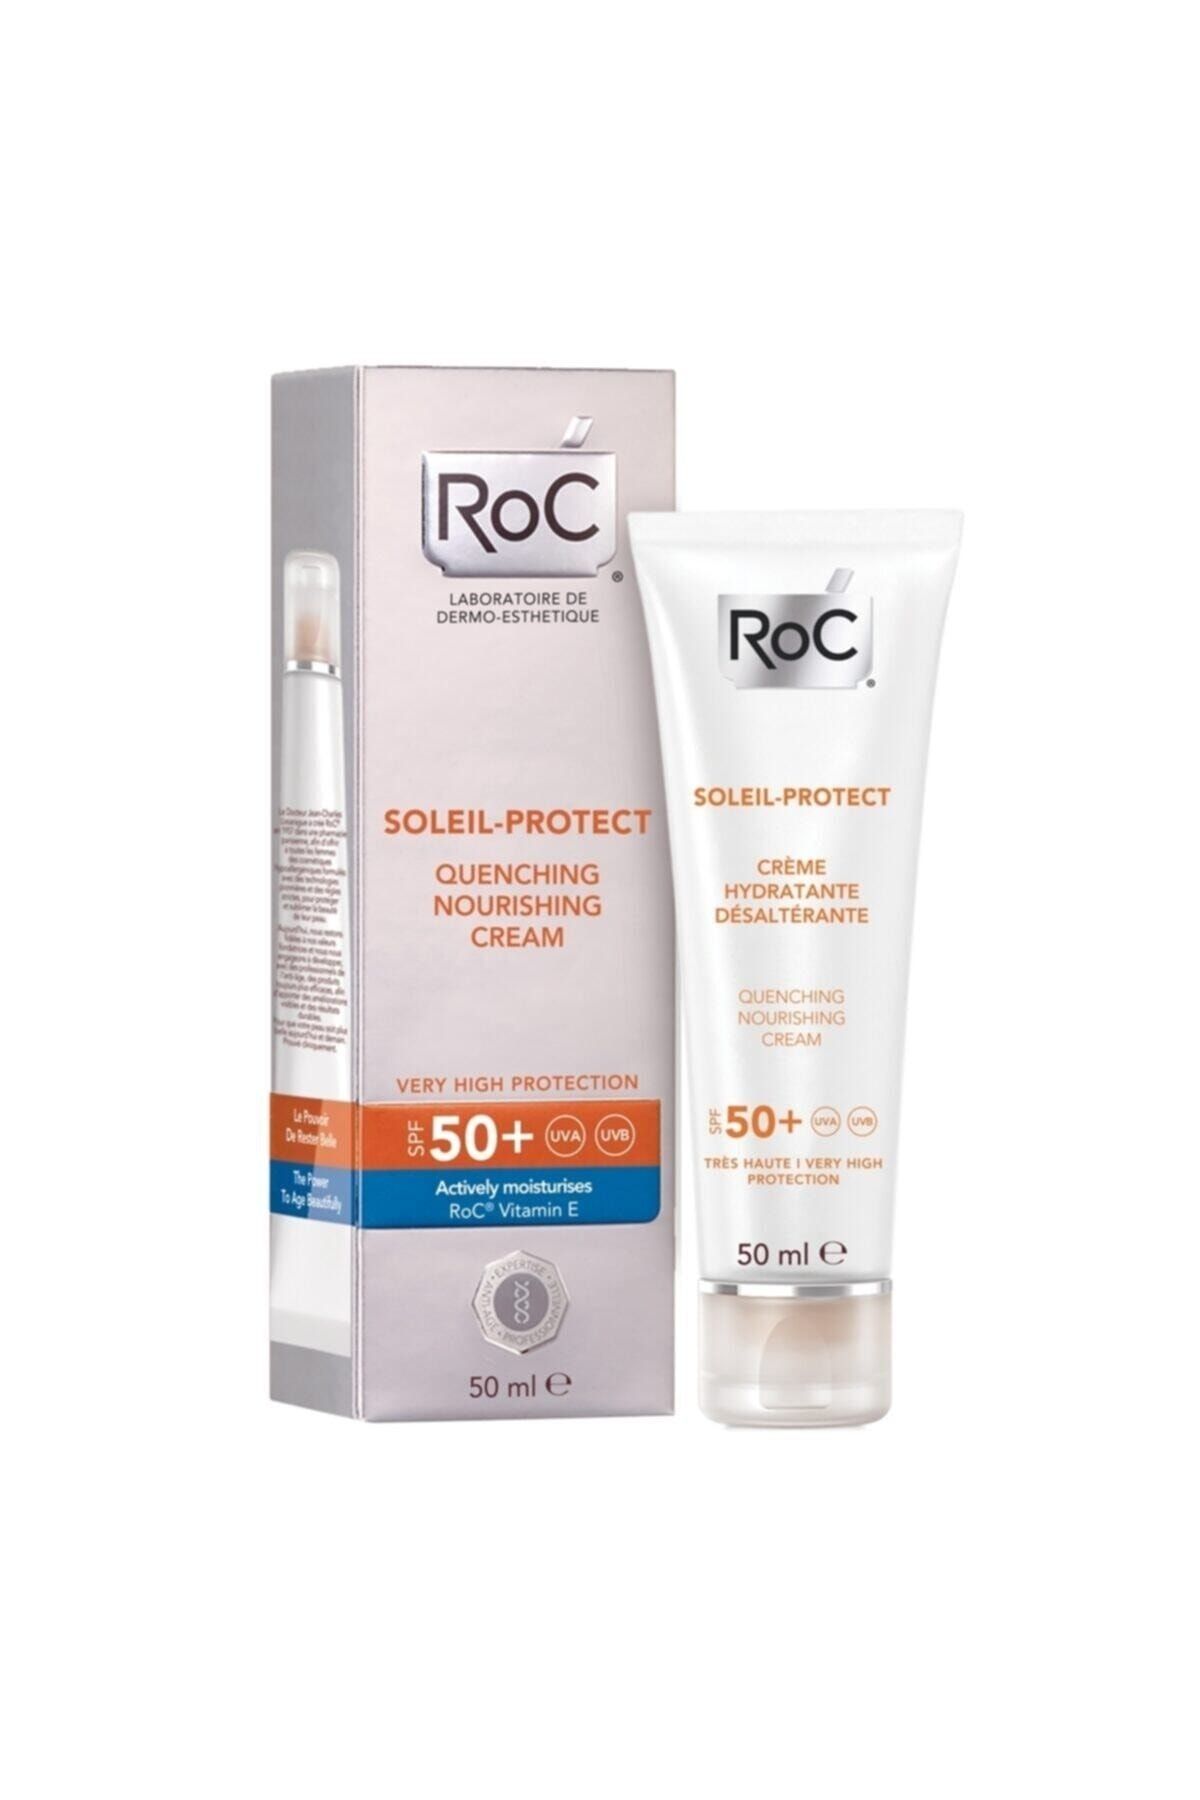 Roc Soleil Protect Quenching Nourishing Cream Spf 50+ -50 ml